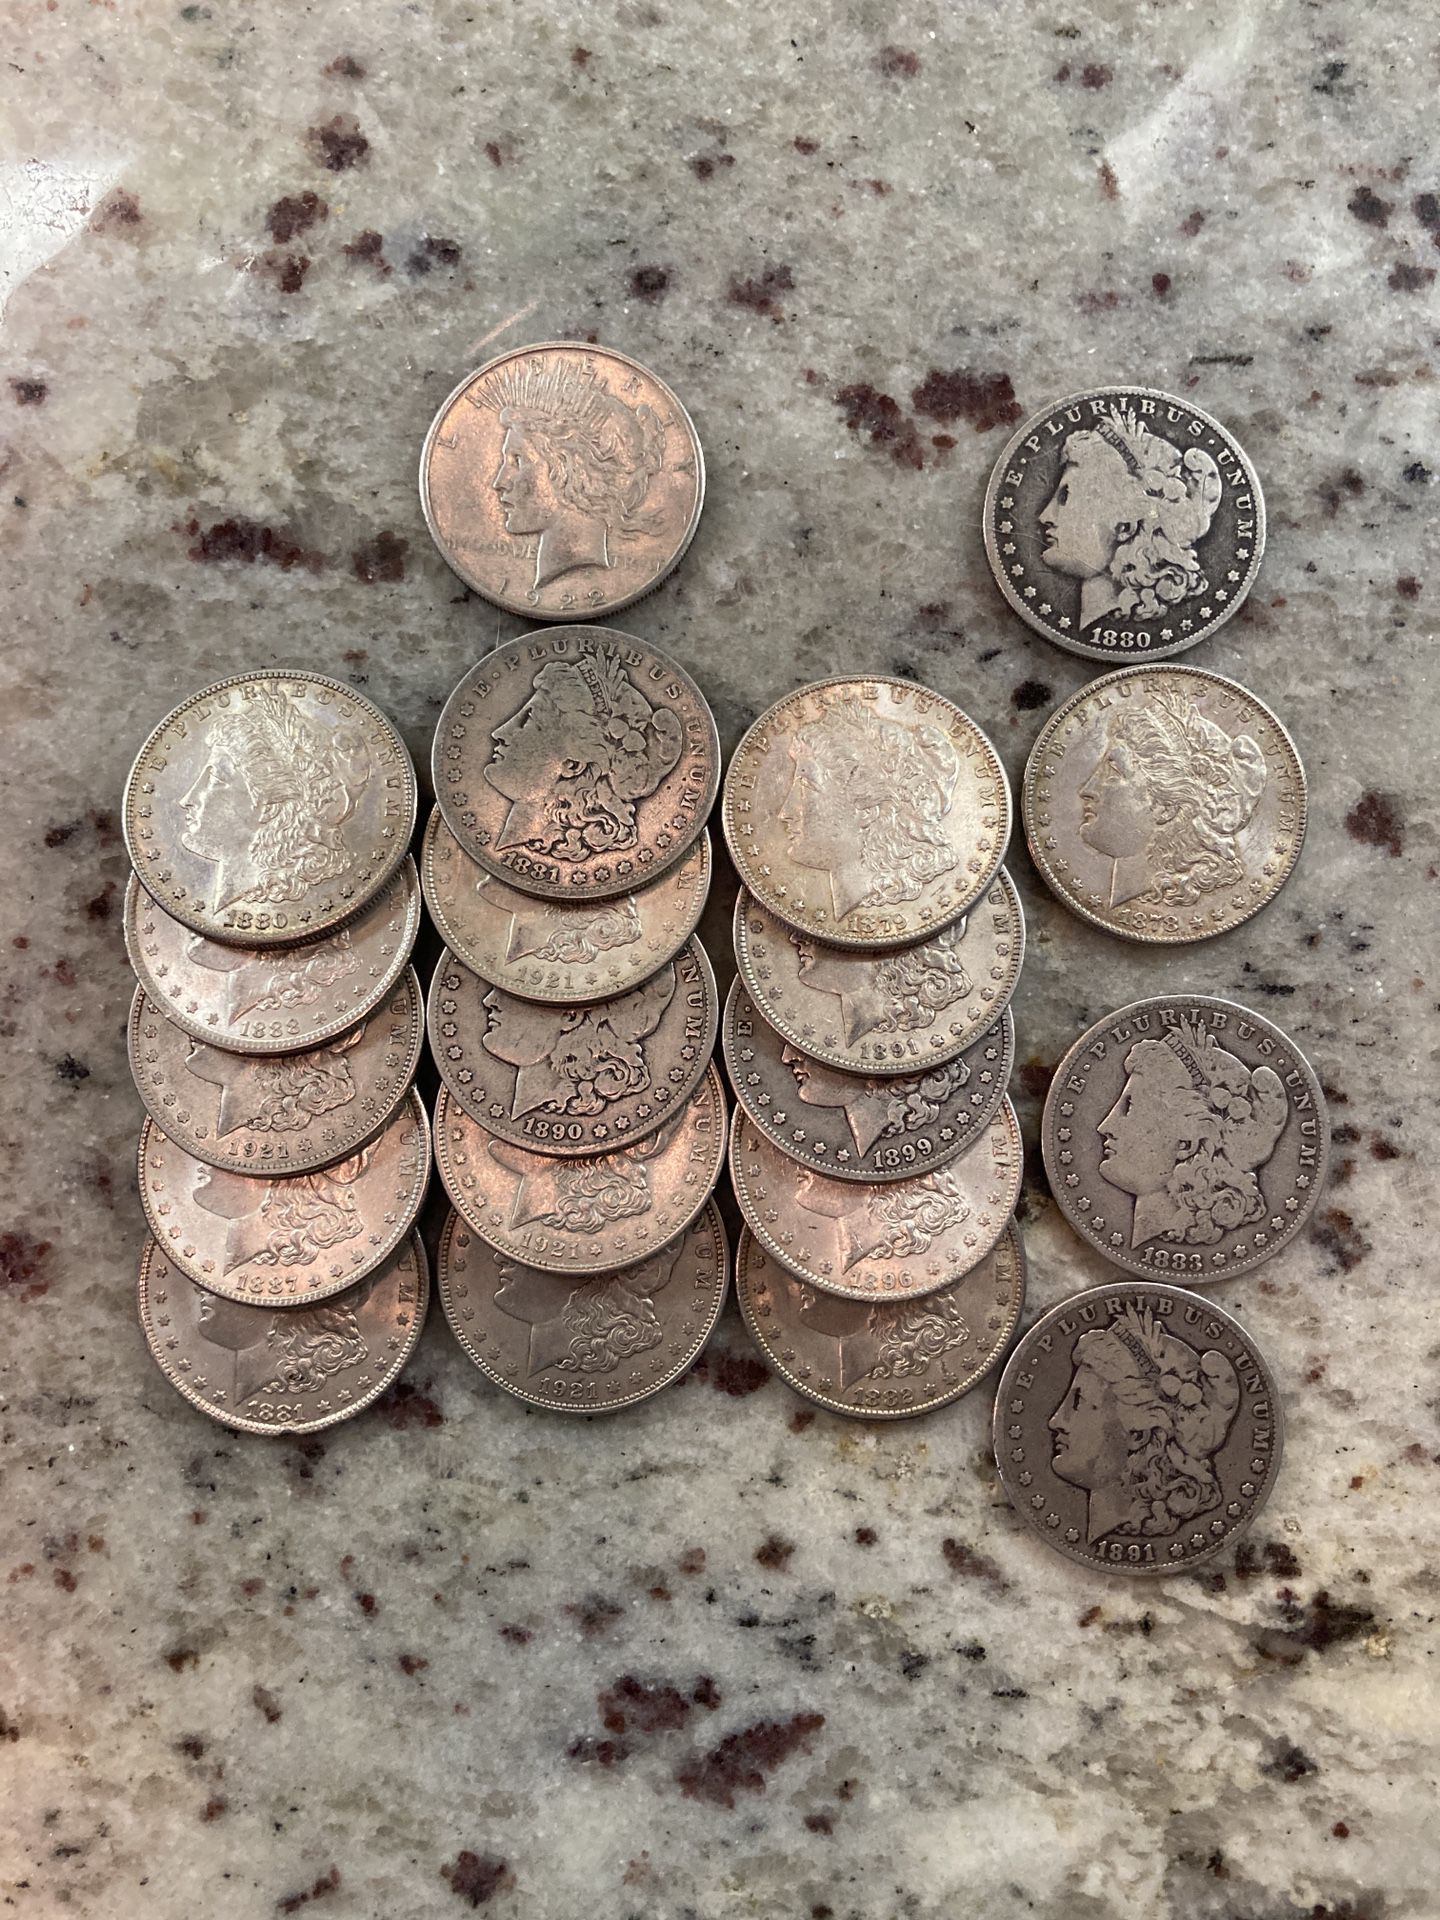 20 Morgan Silver Dollars (2 are Carson City)